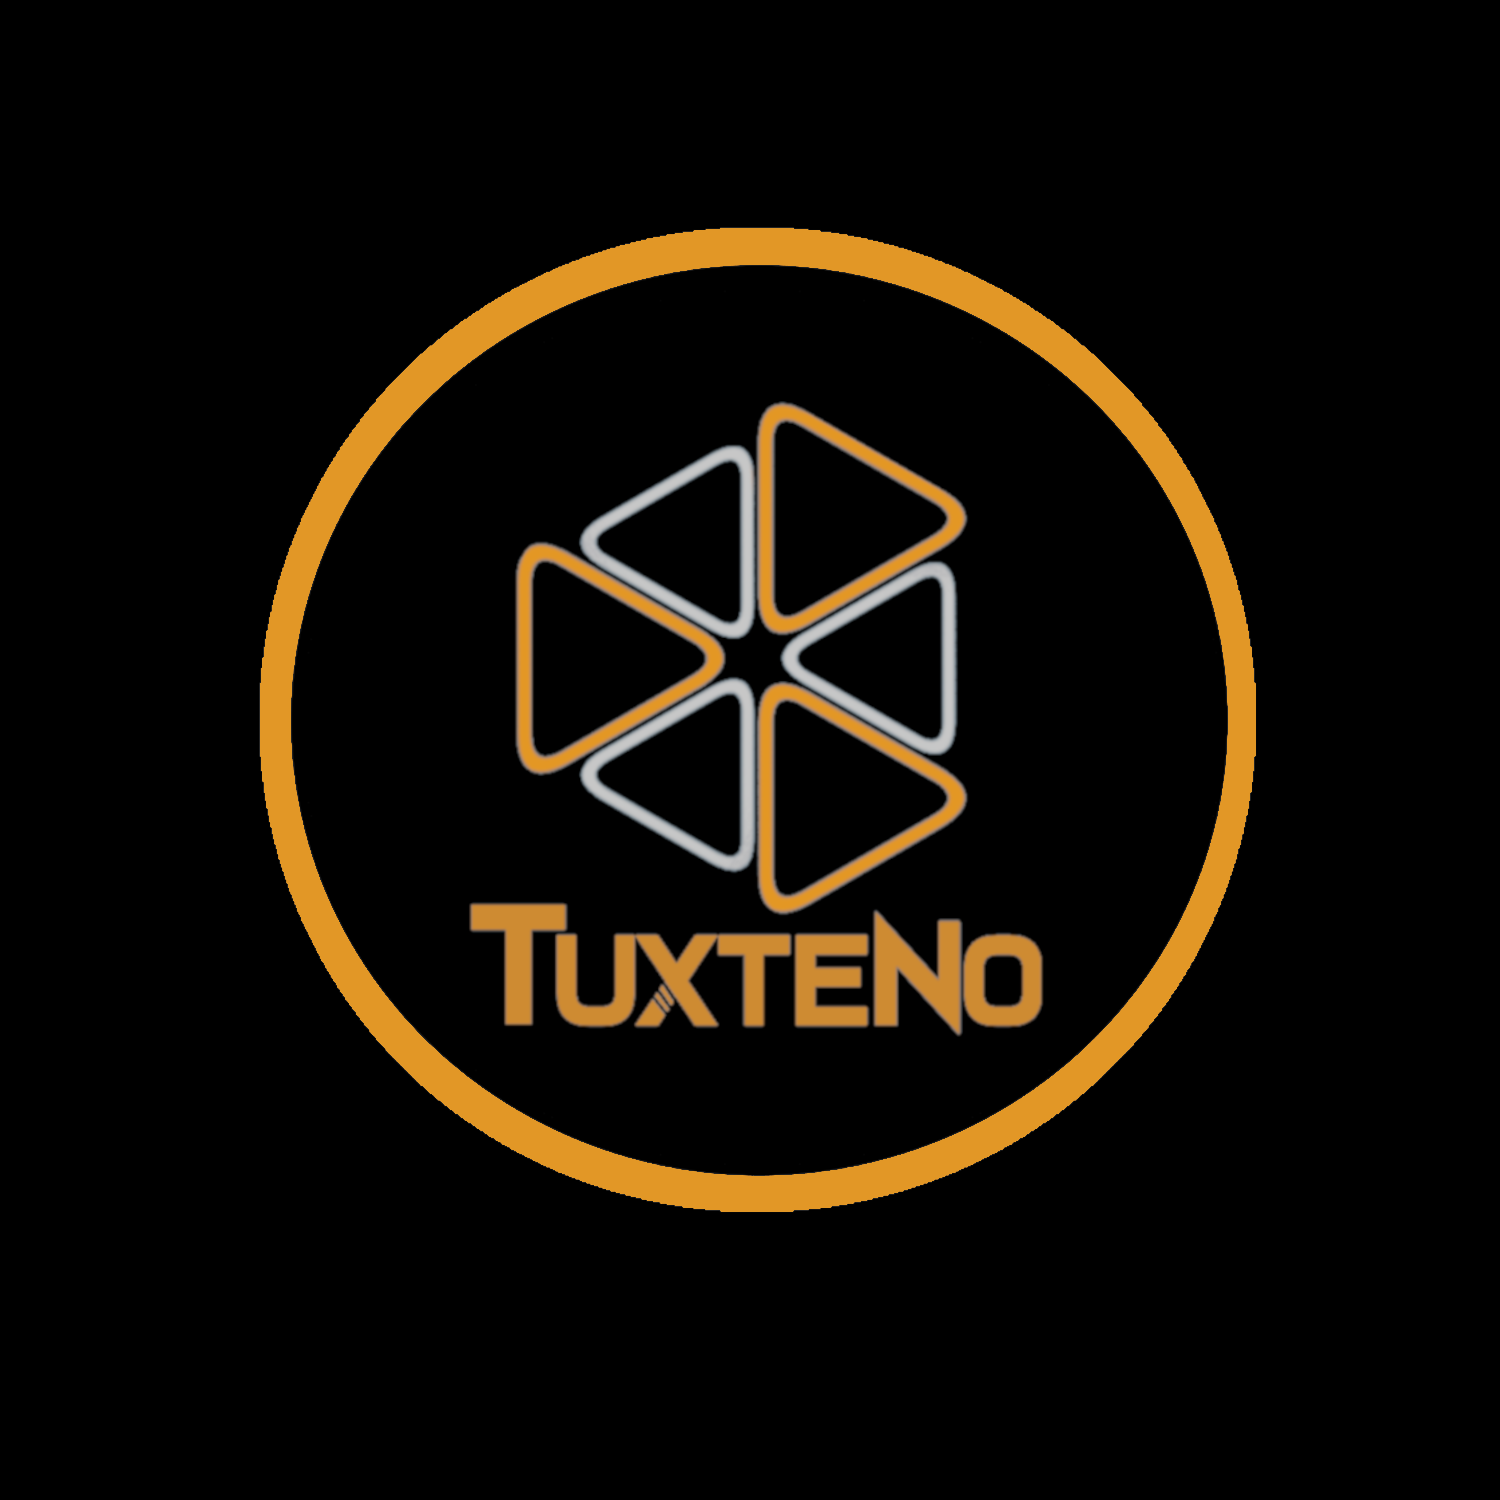 Tuxteno 127 – Top 20 series geek.